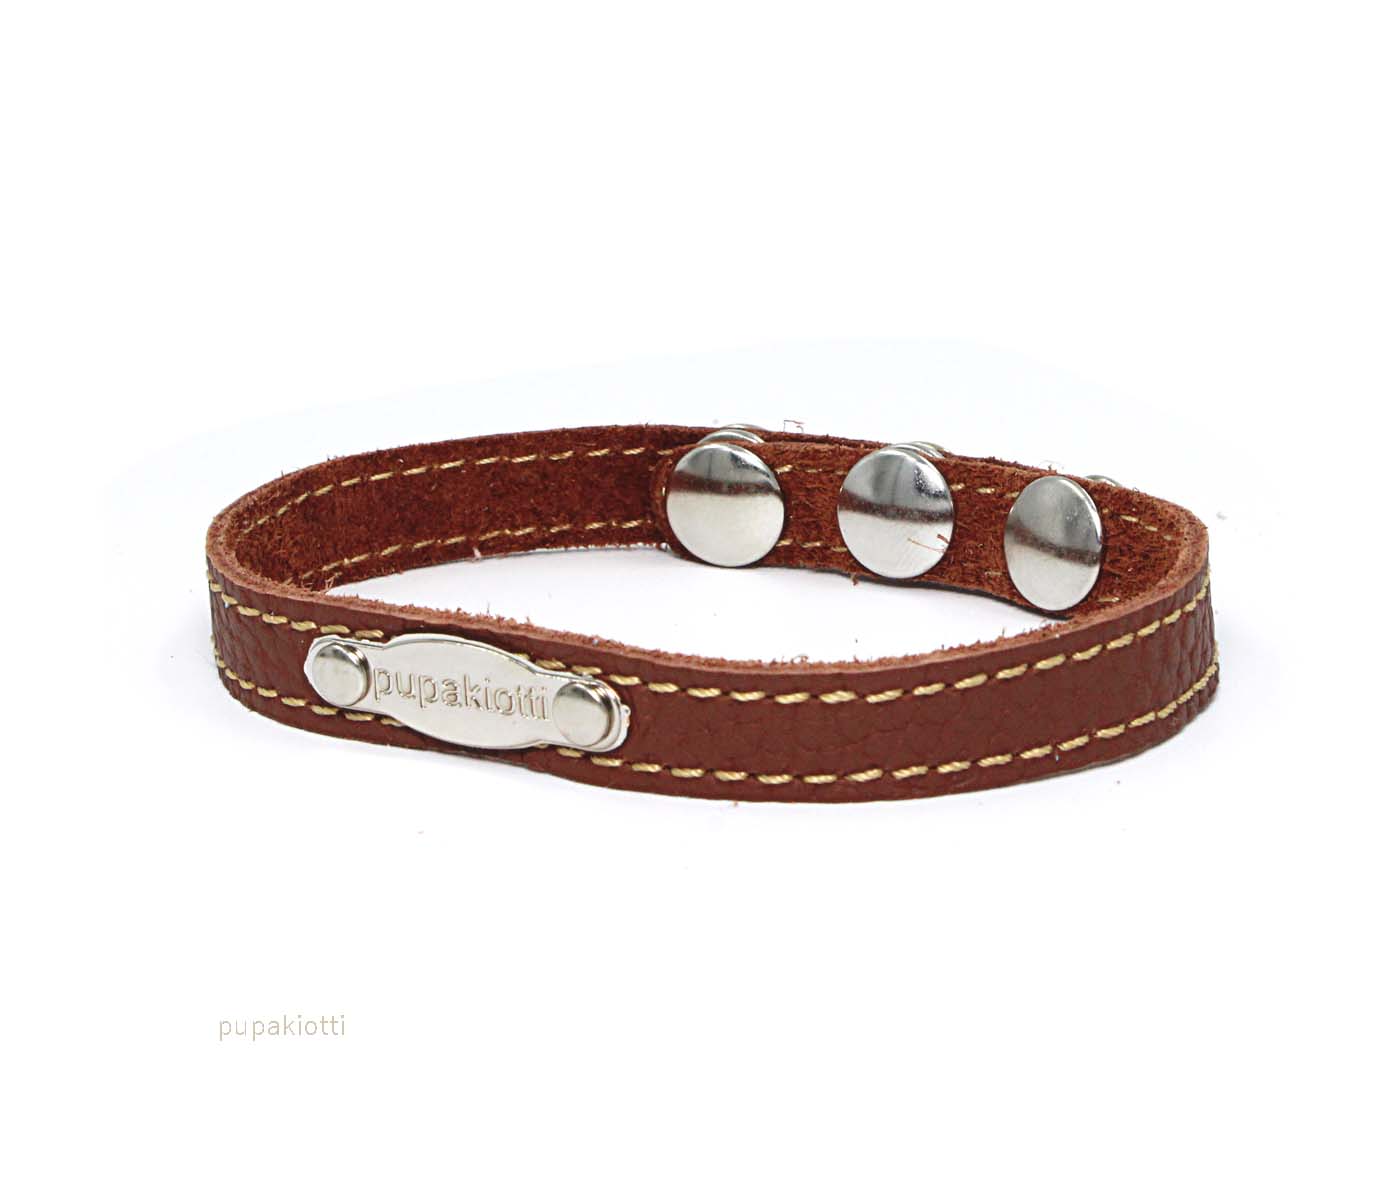 Basic. Genuine leather leather collar for bandana for dog